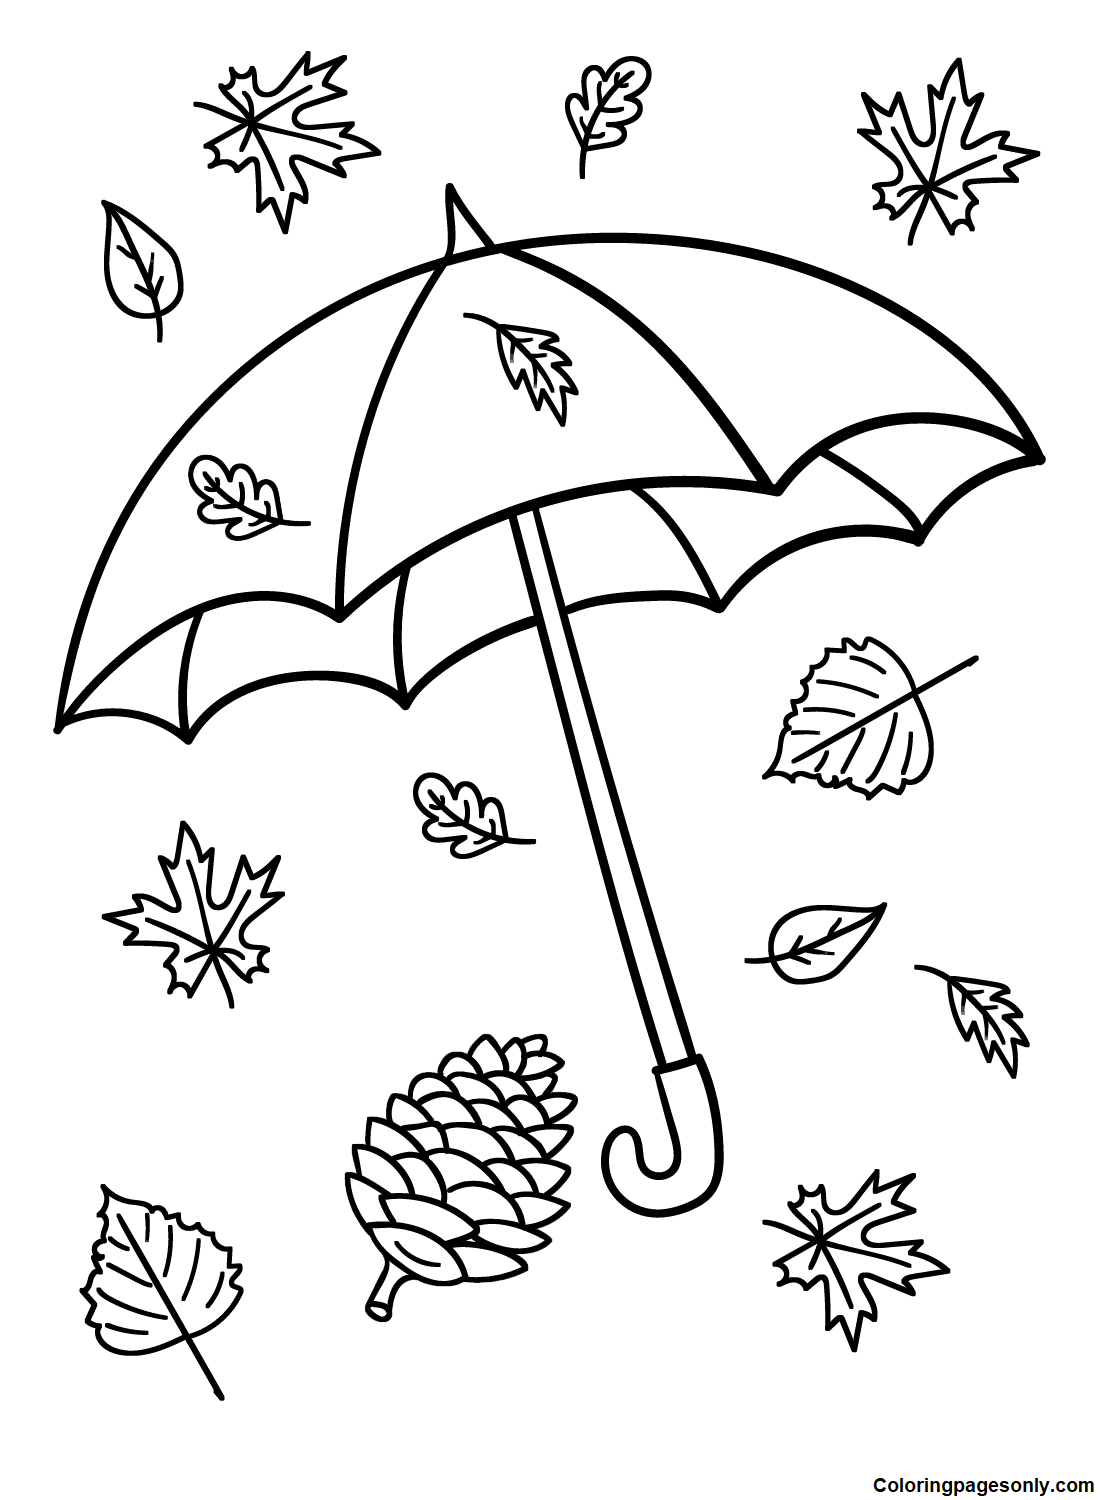 Guarda-chuvas e folhas de guarda-chuva